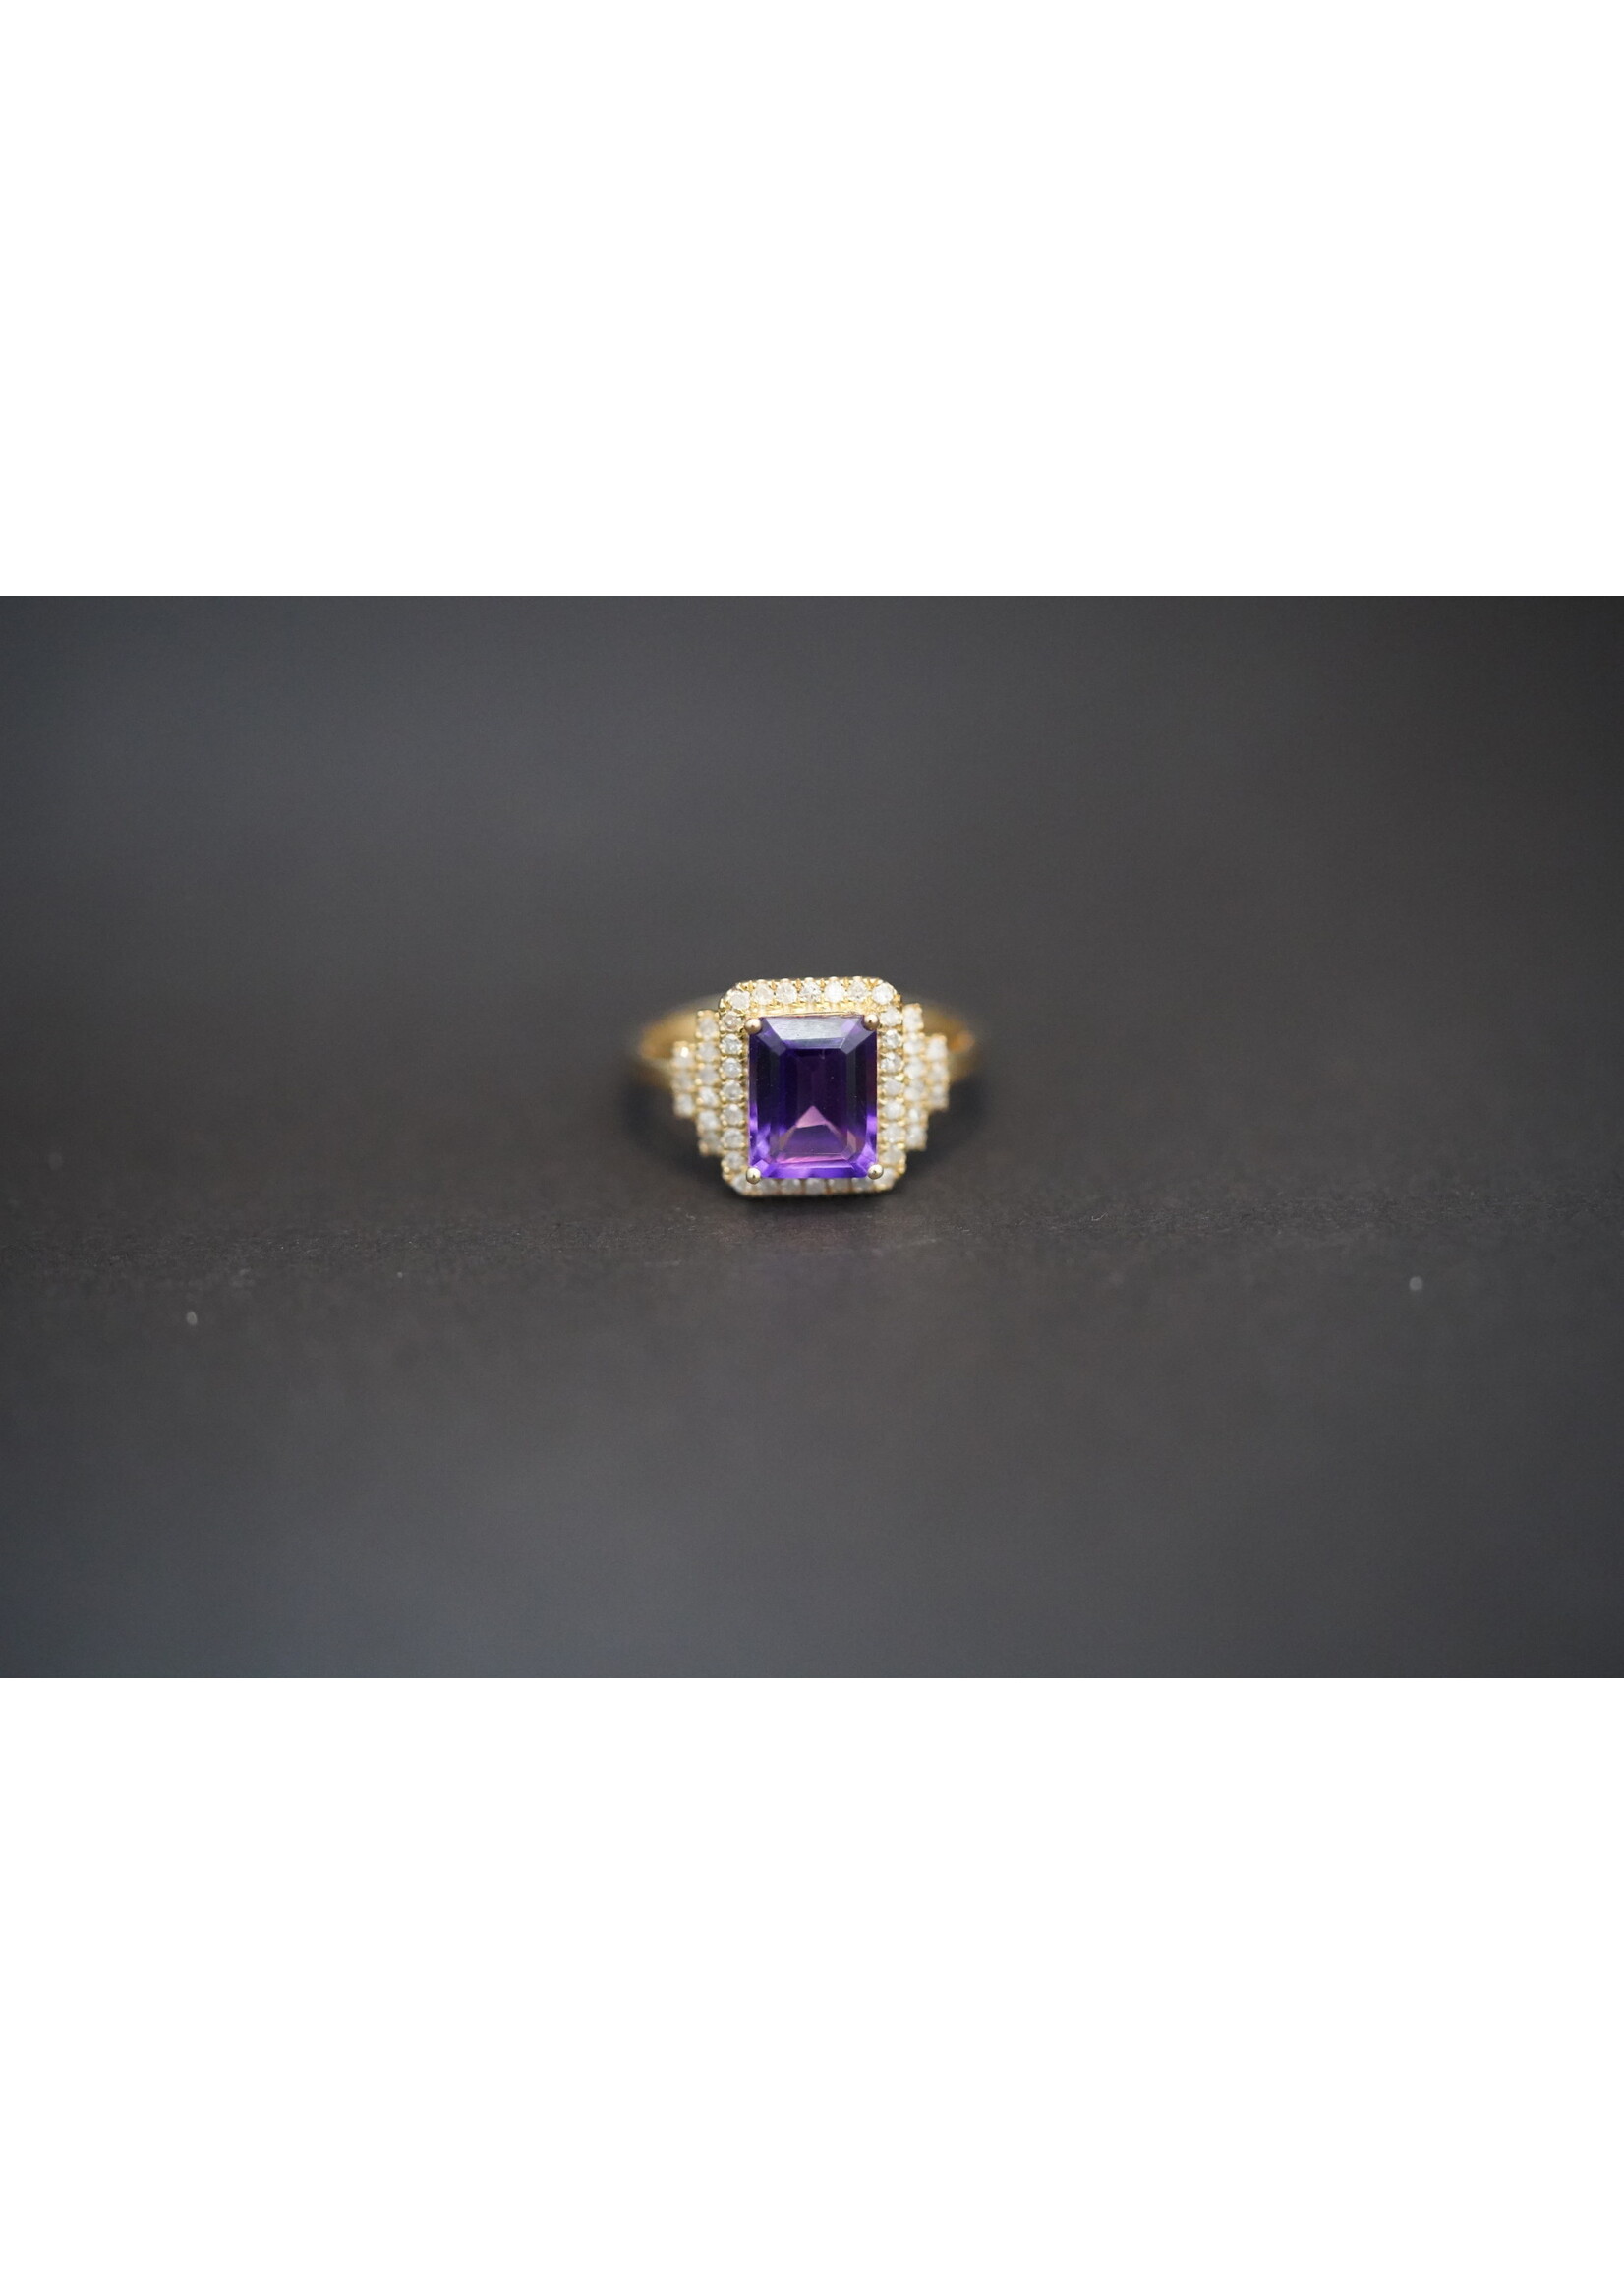 14KY 2.70g 2.60ctw (2.26ctr) Amethyst & Diamond Fashion Ring (size 7)